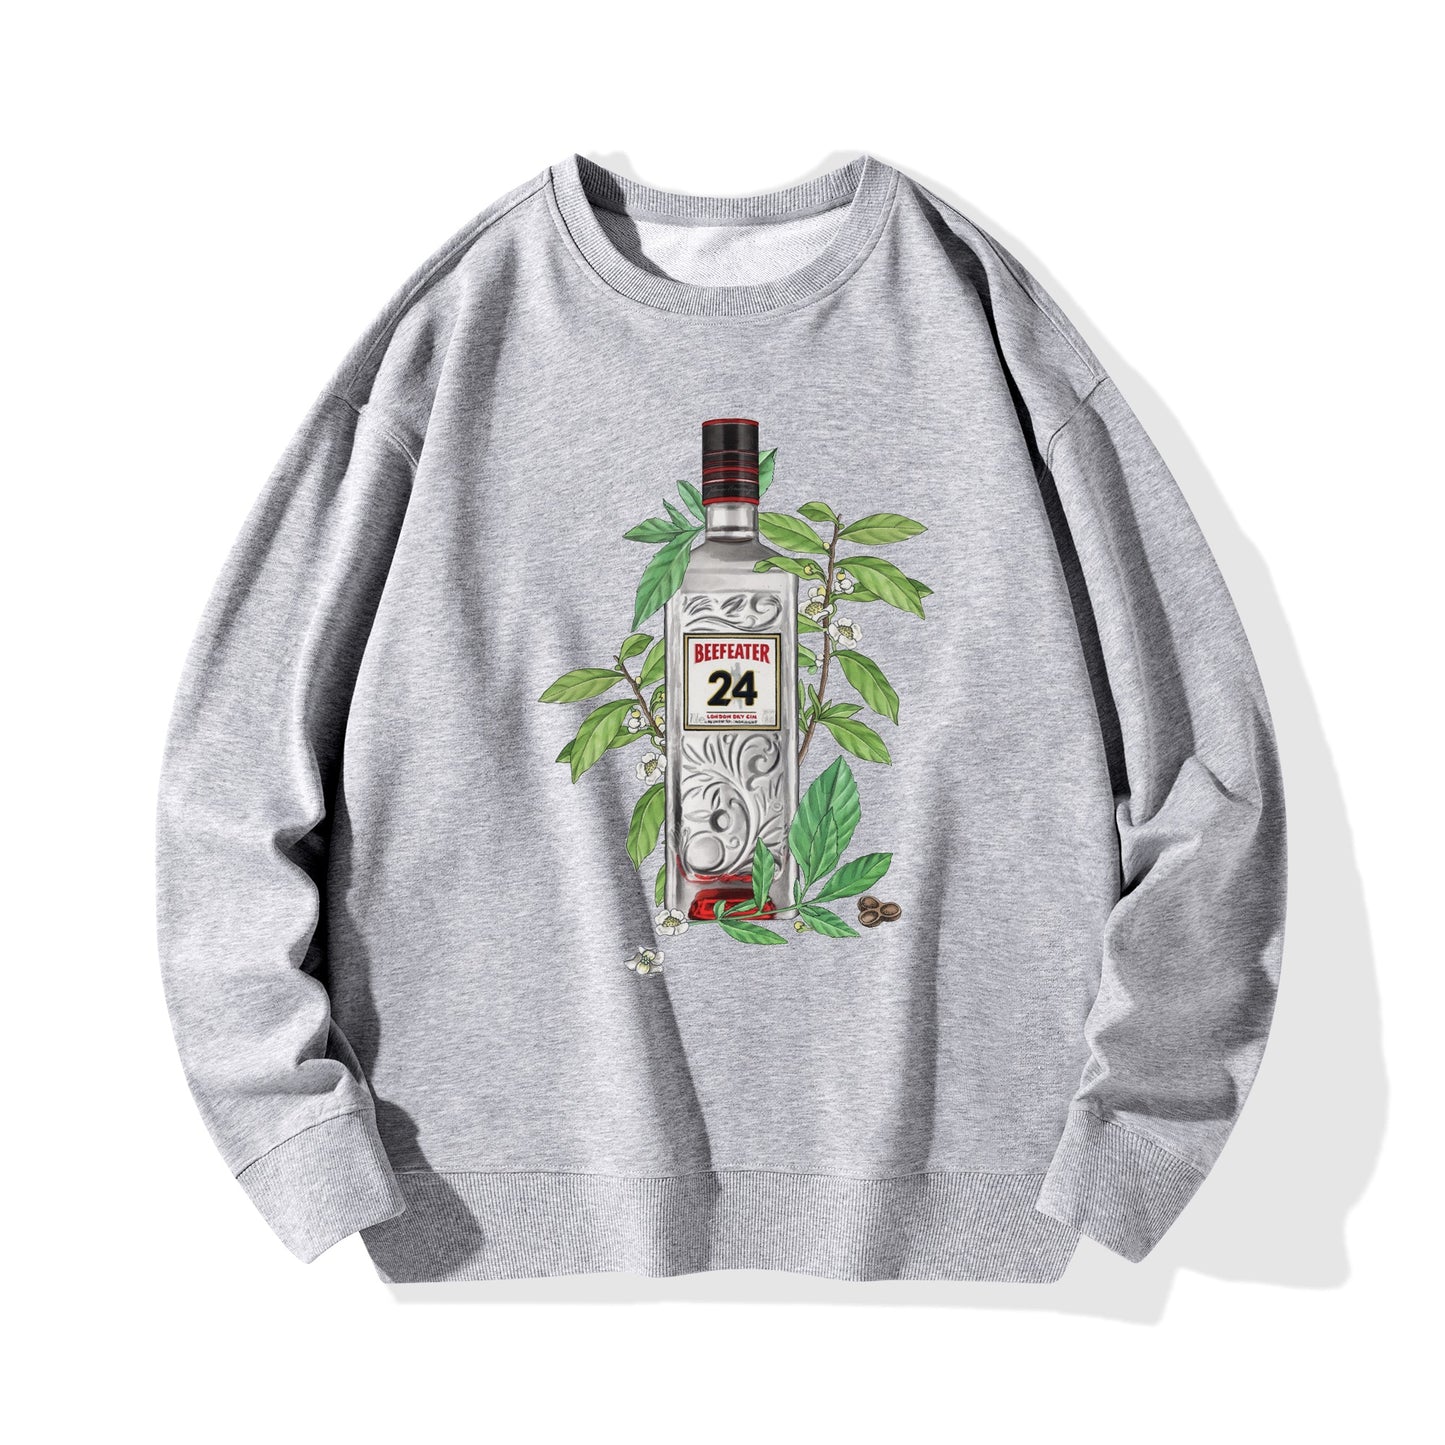 Sweatershirt Cotton gin beefeater floral art DrinkandArt